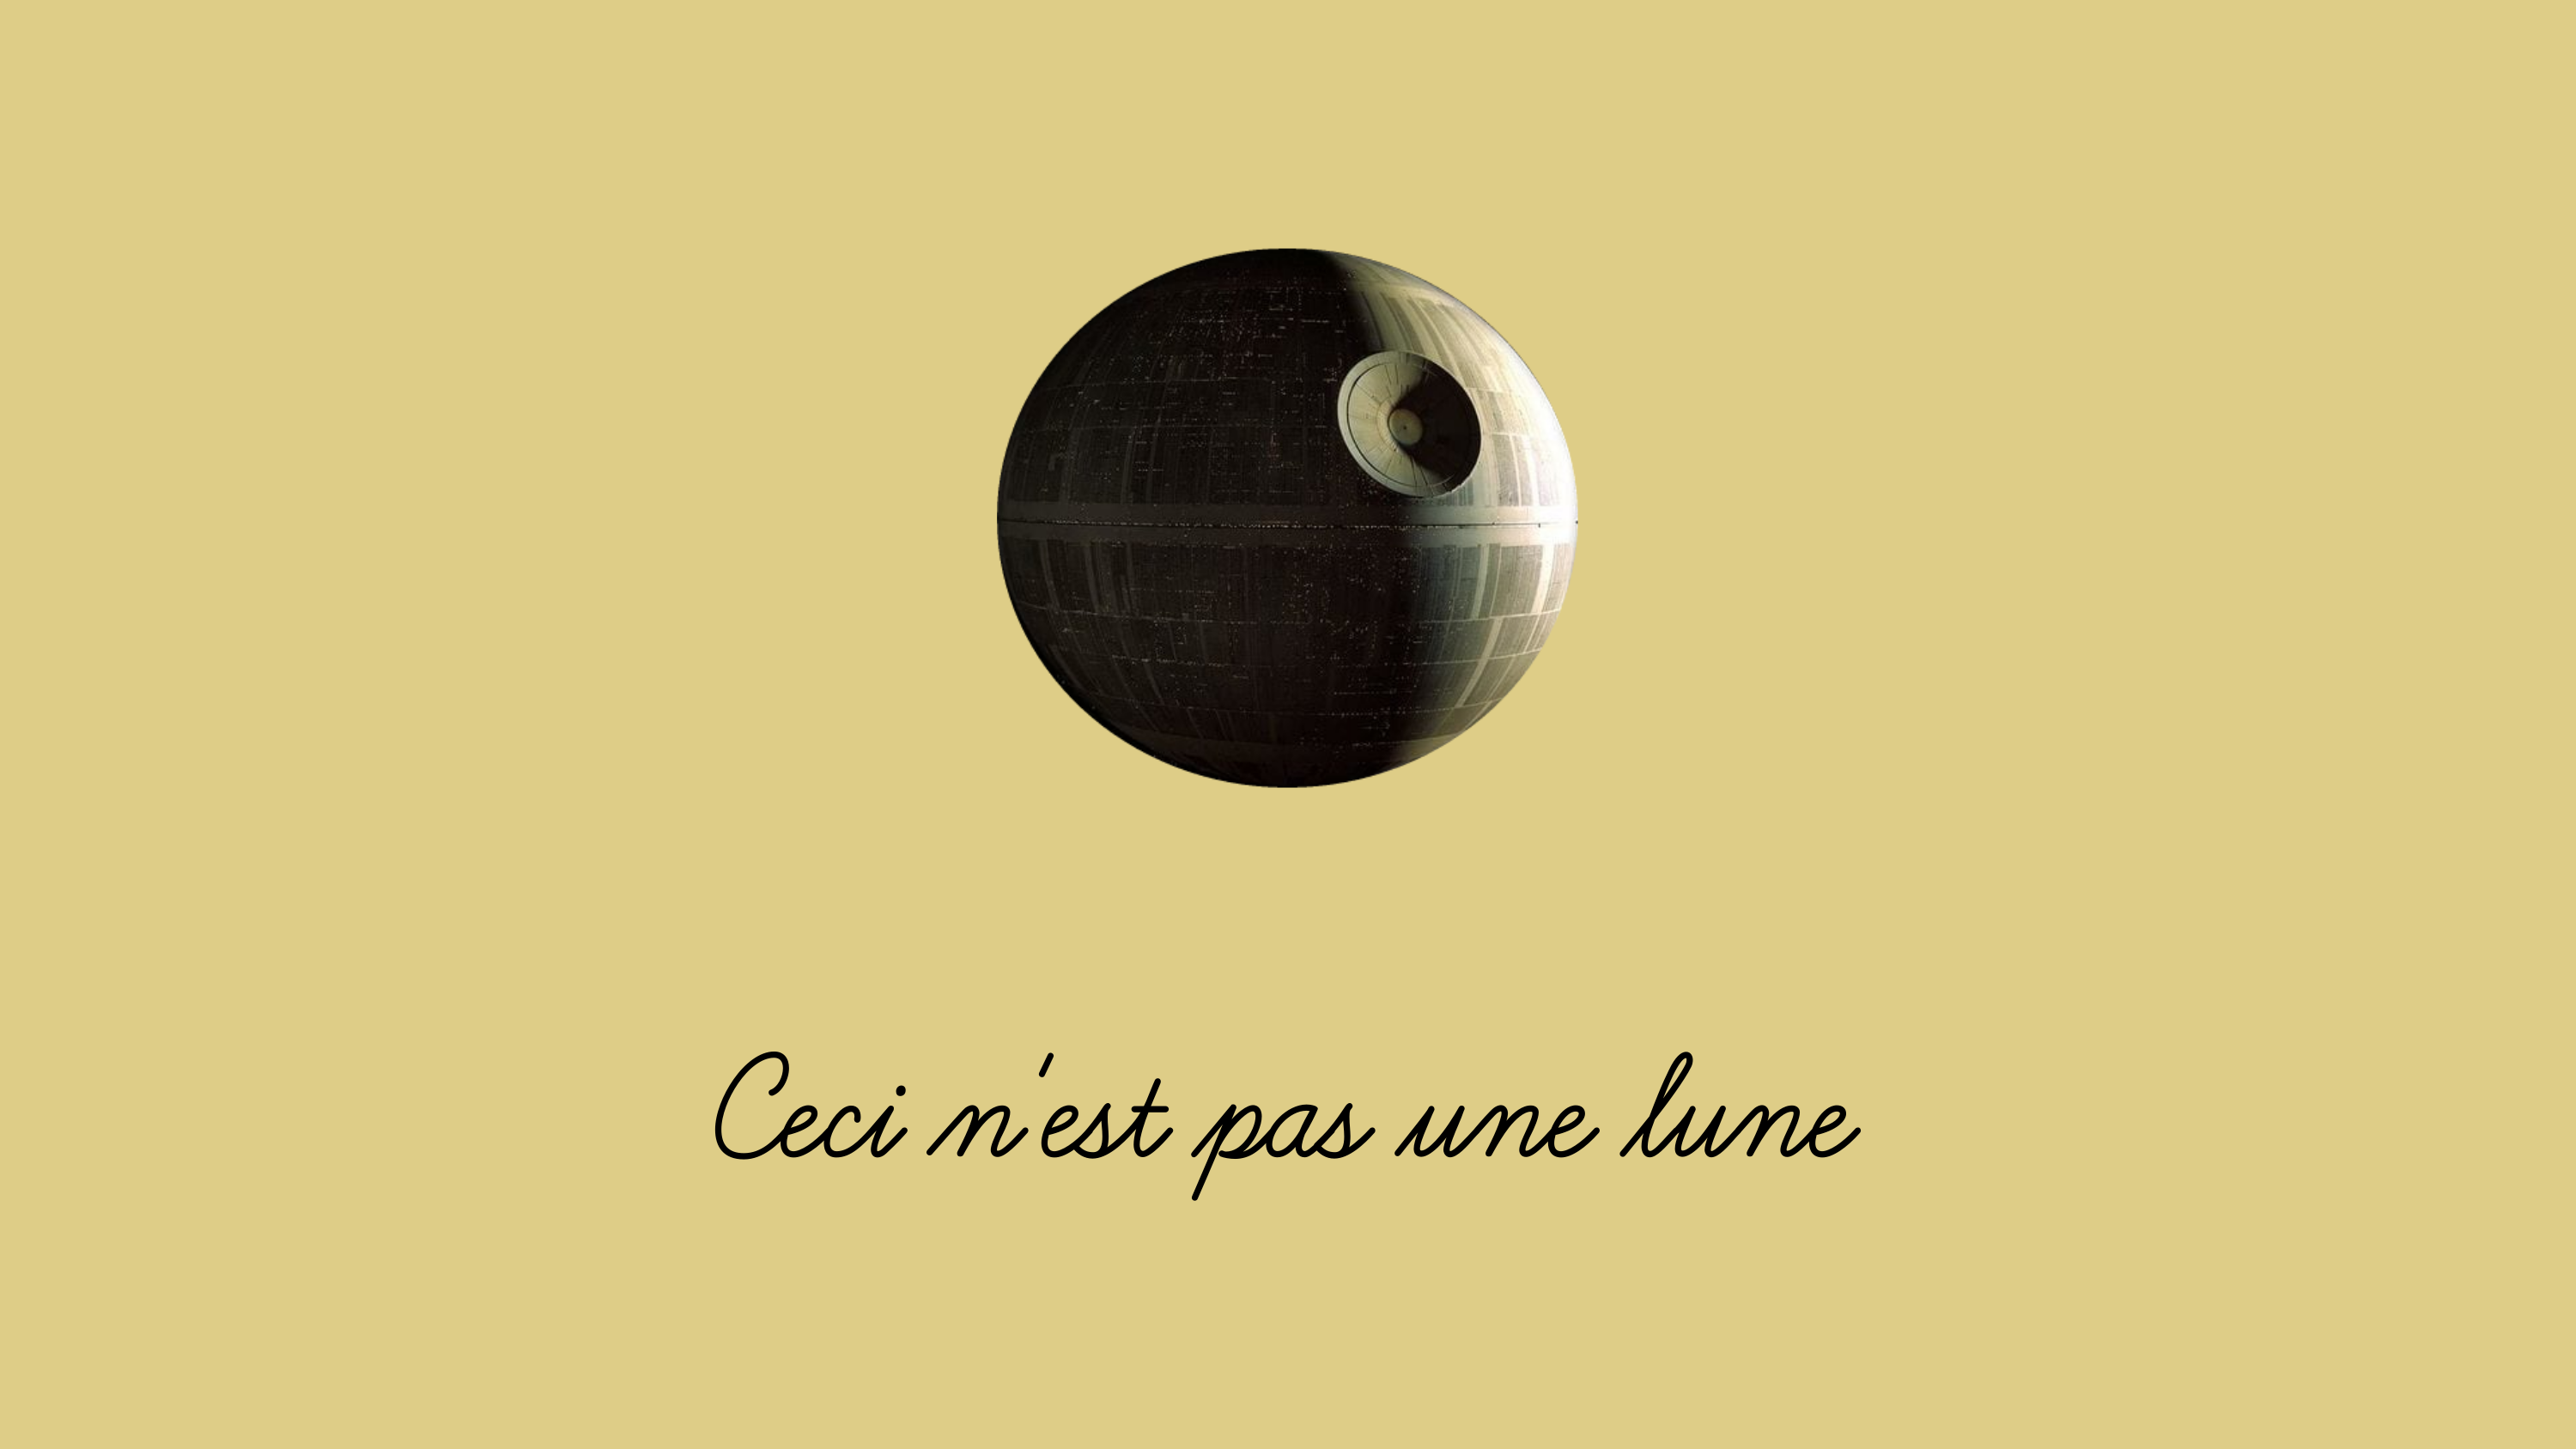 General 3000x1688 Star Wars Death Star parody digital art simple background text French